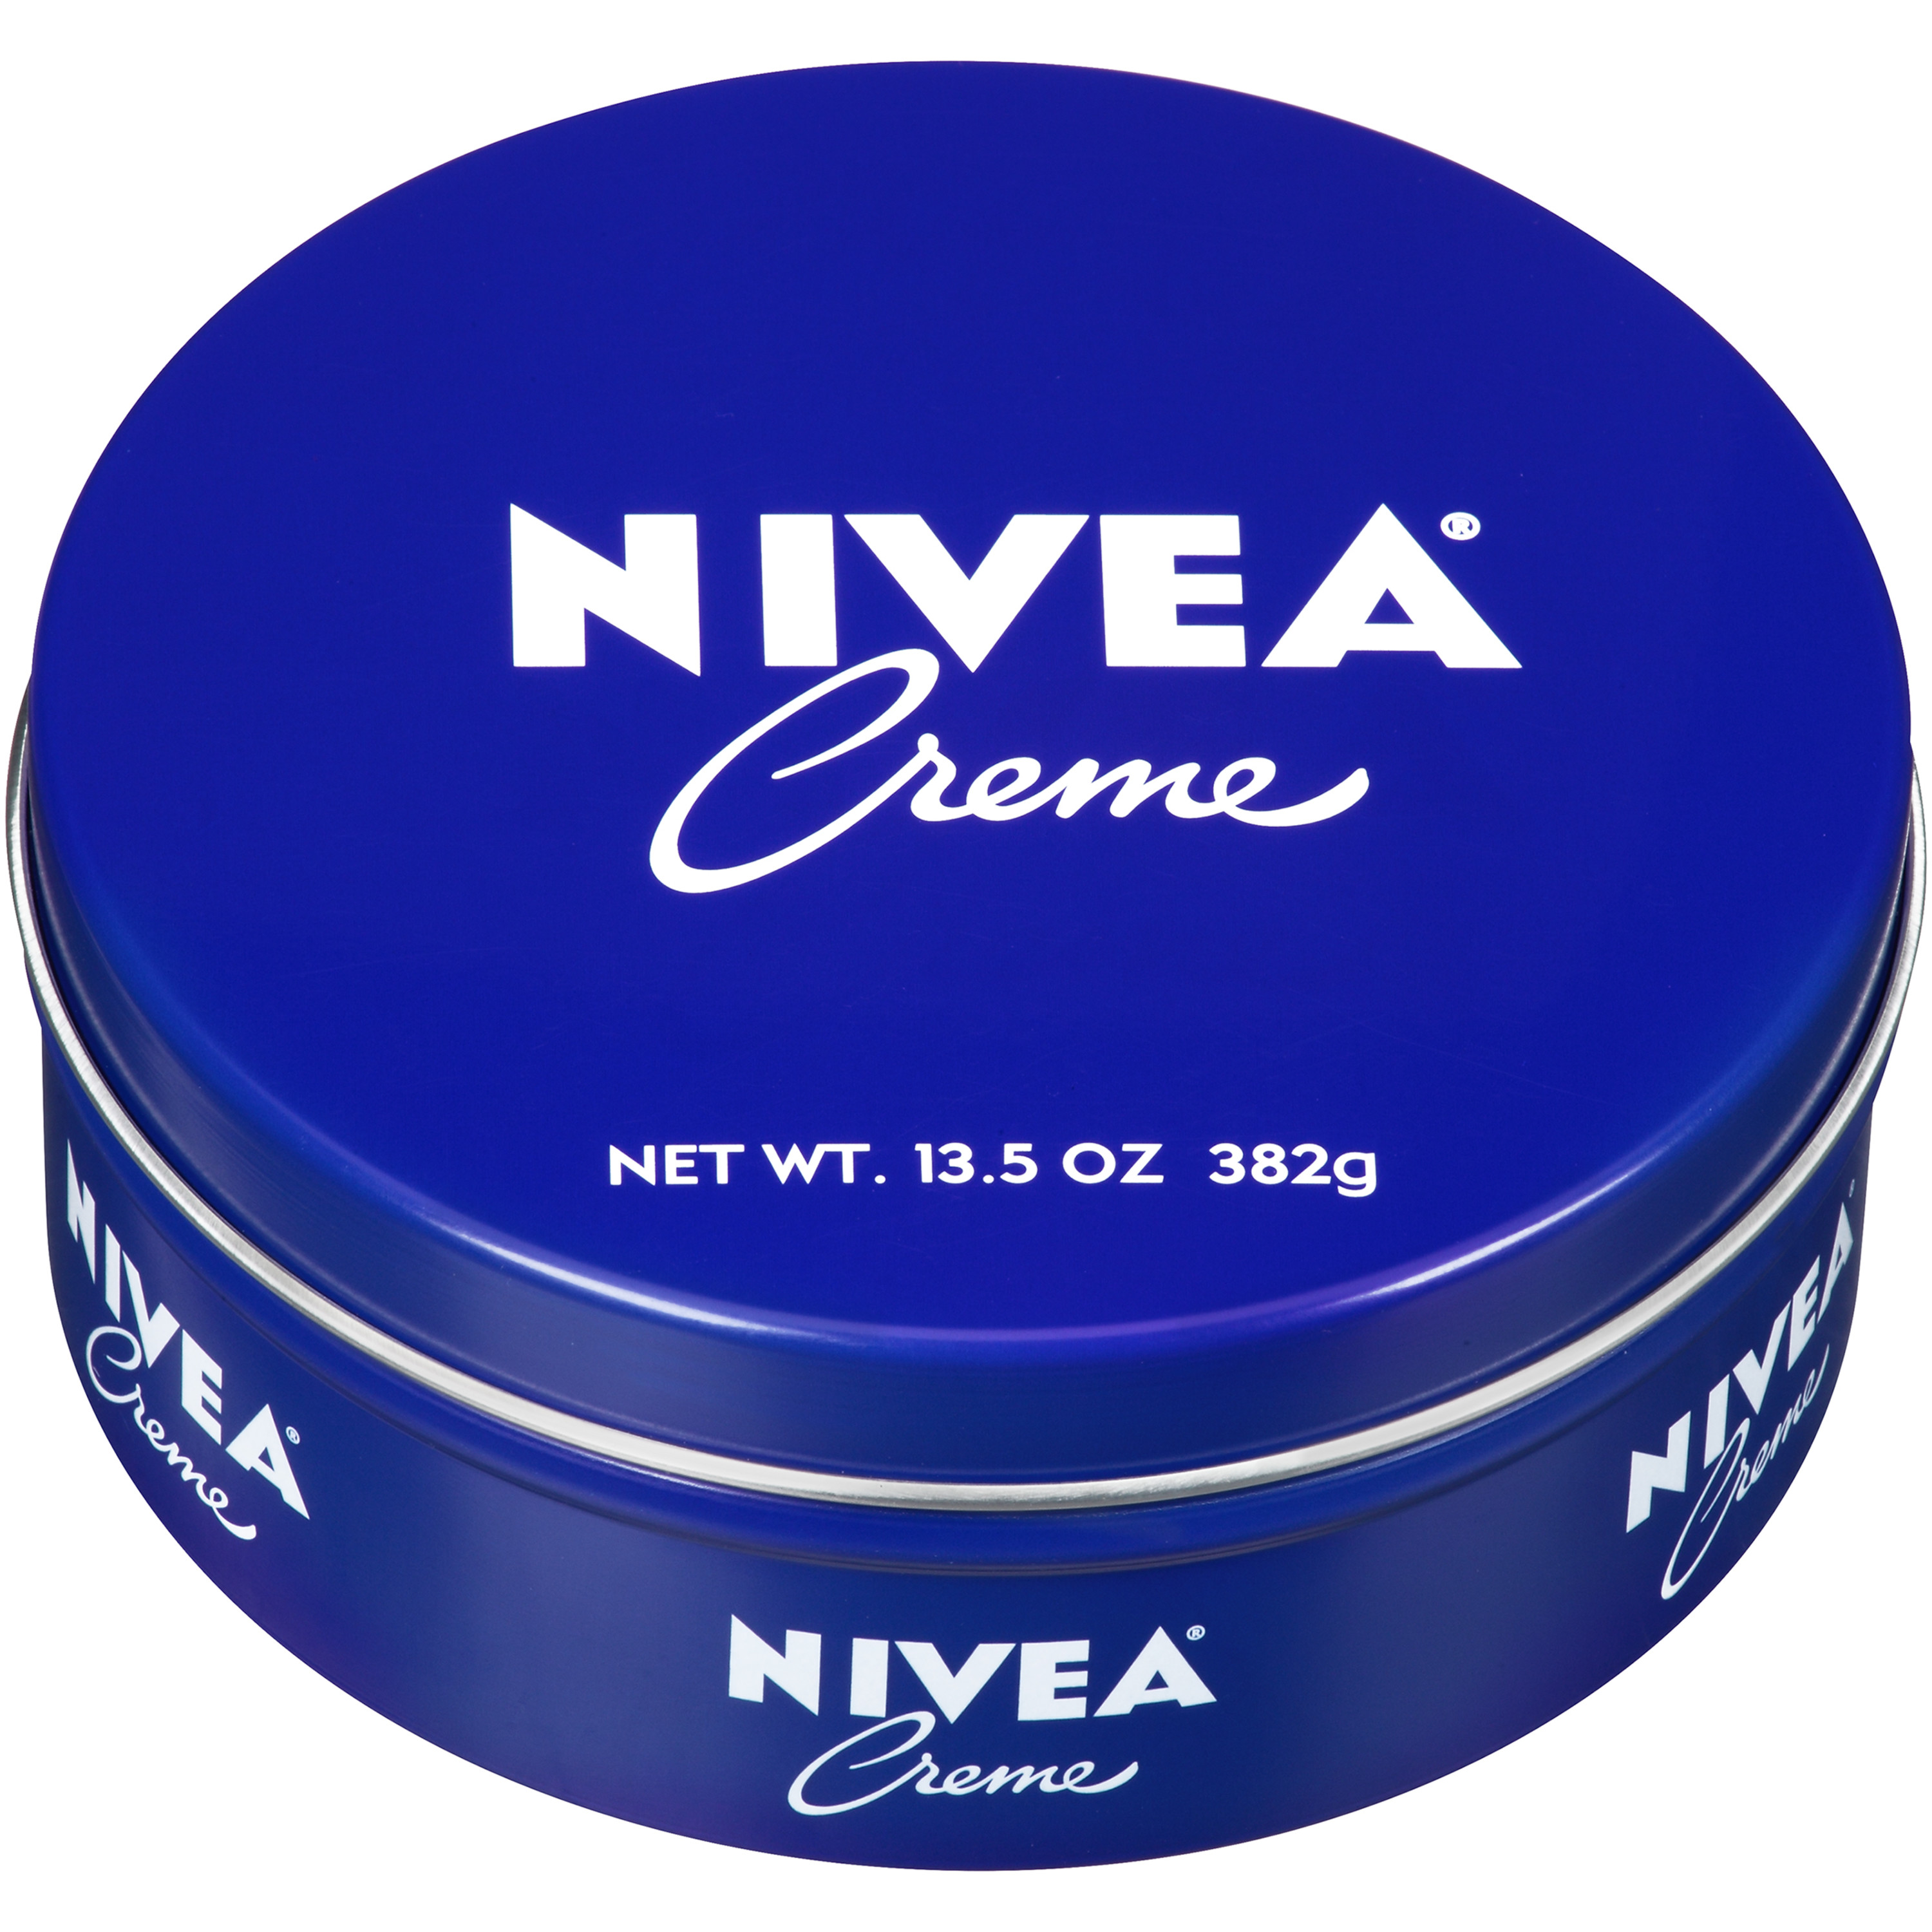 NIVEA Creme Body, Face and Hand Moisturizing Cream, 13.5 Oz Tin - image 1 of 11